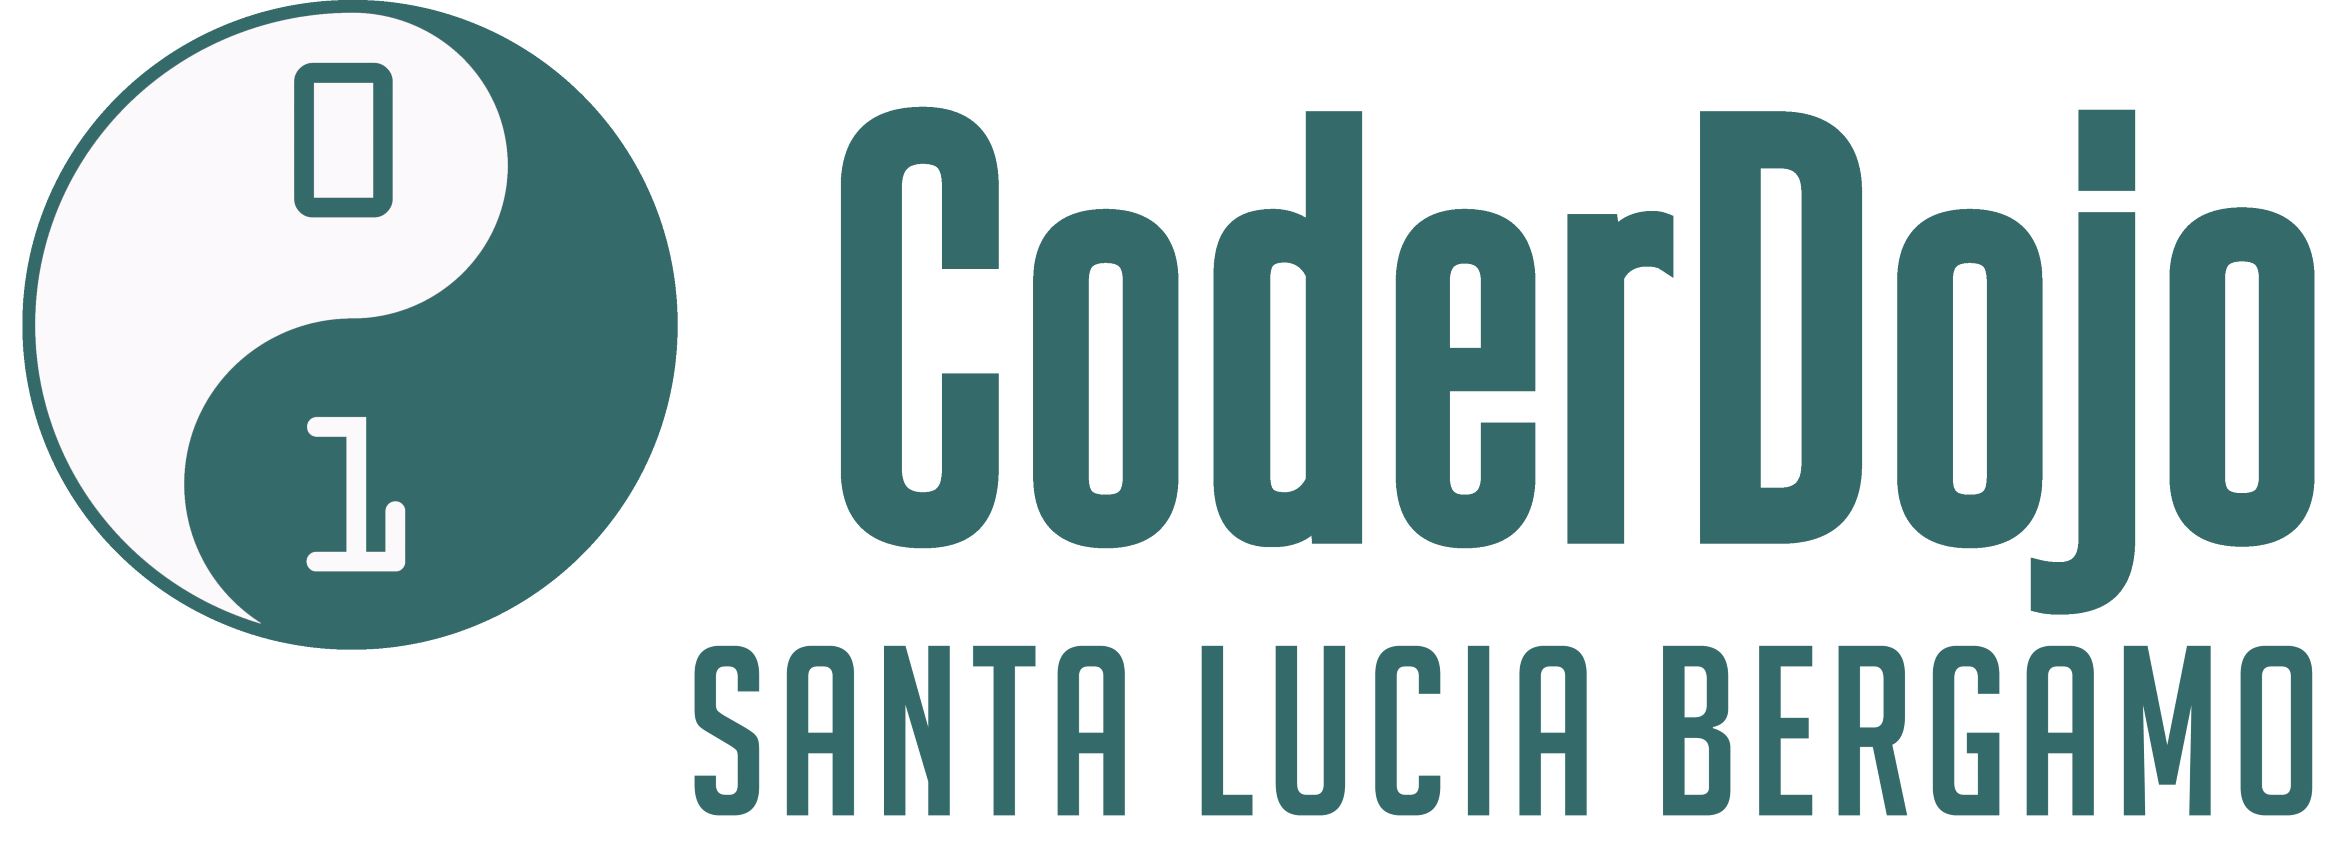  rid coderdojo santalucia logo 